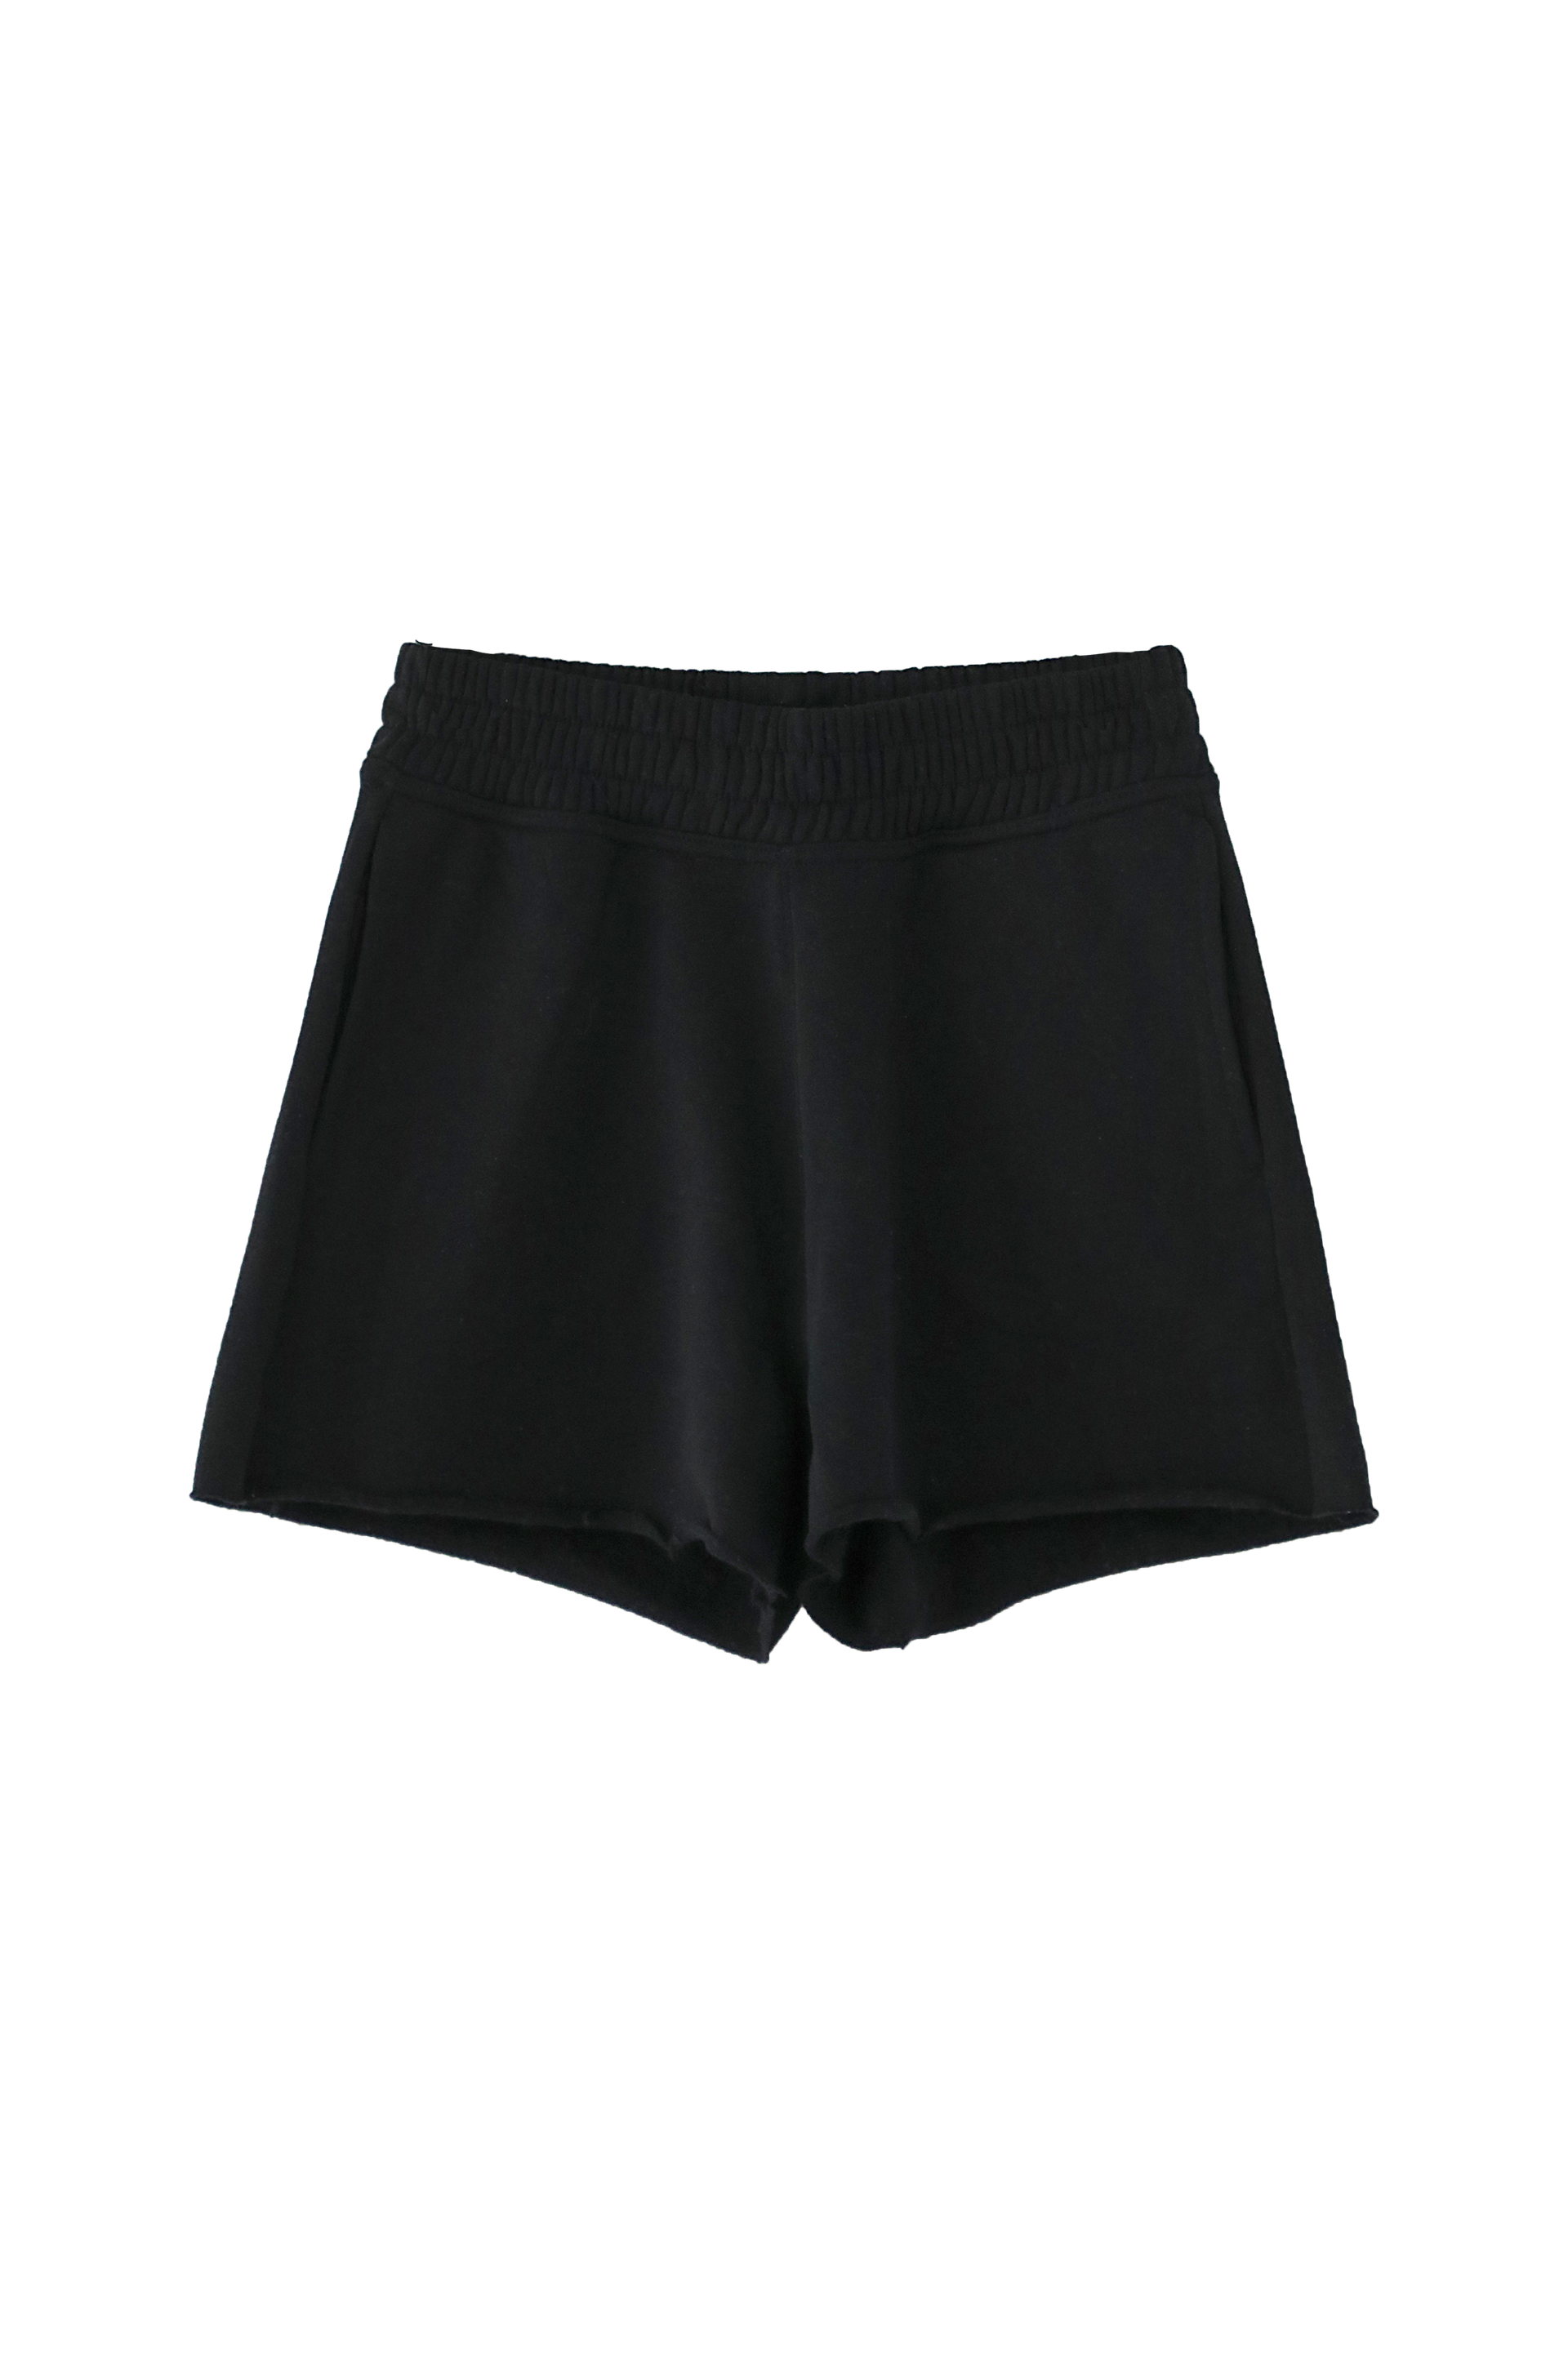 Easy Shorts: Black